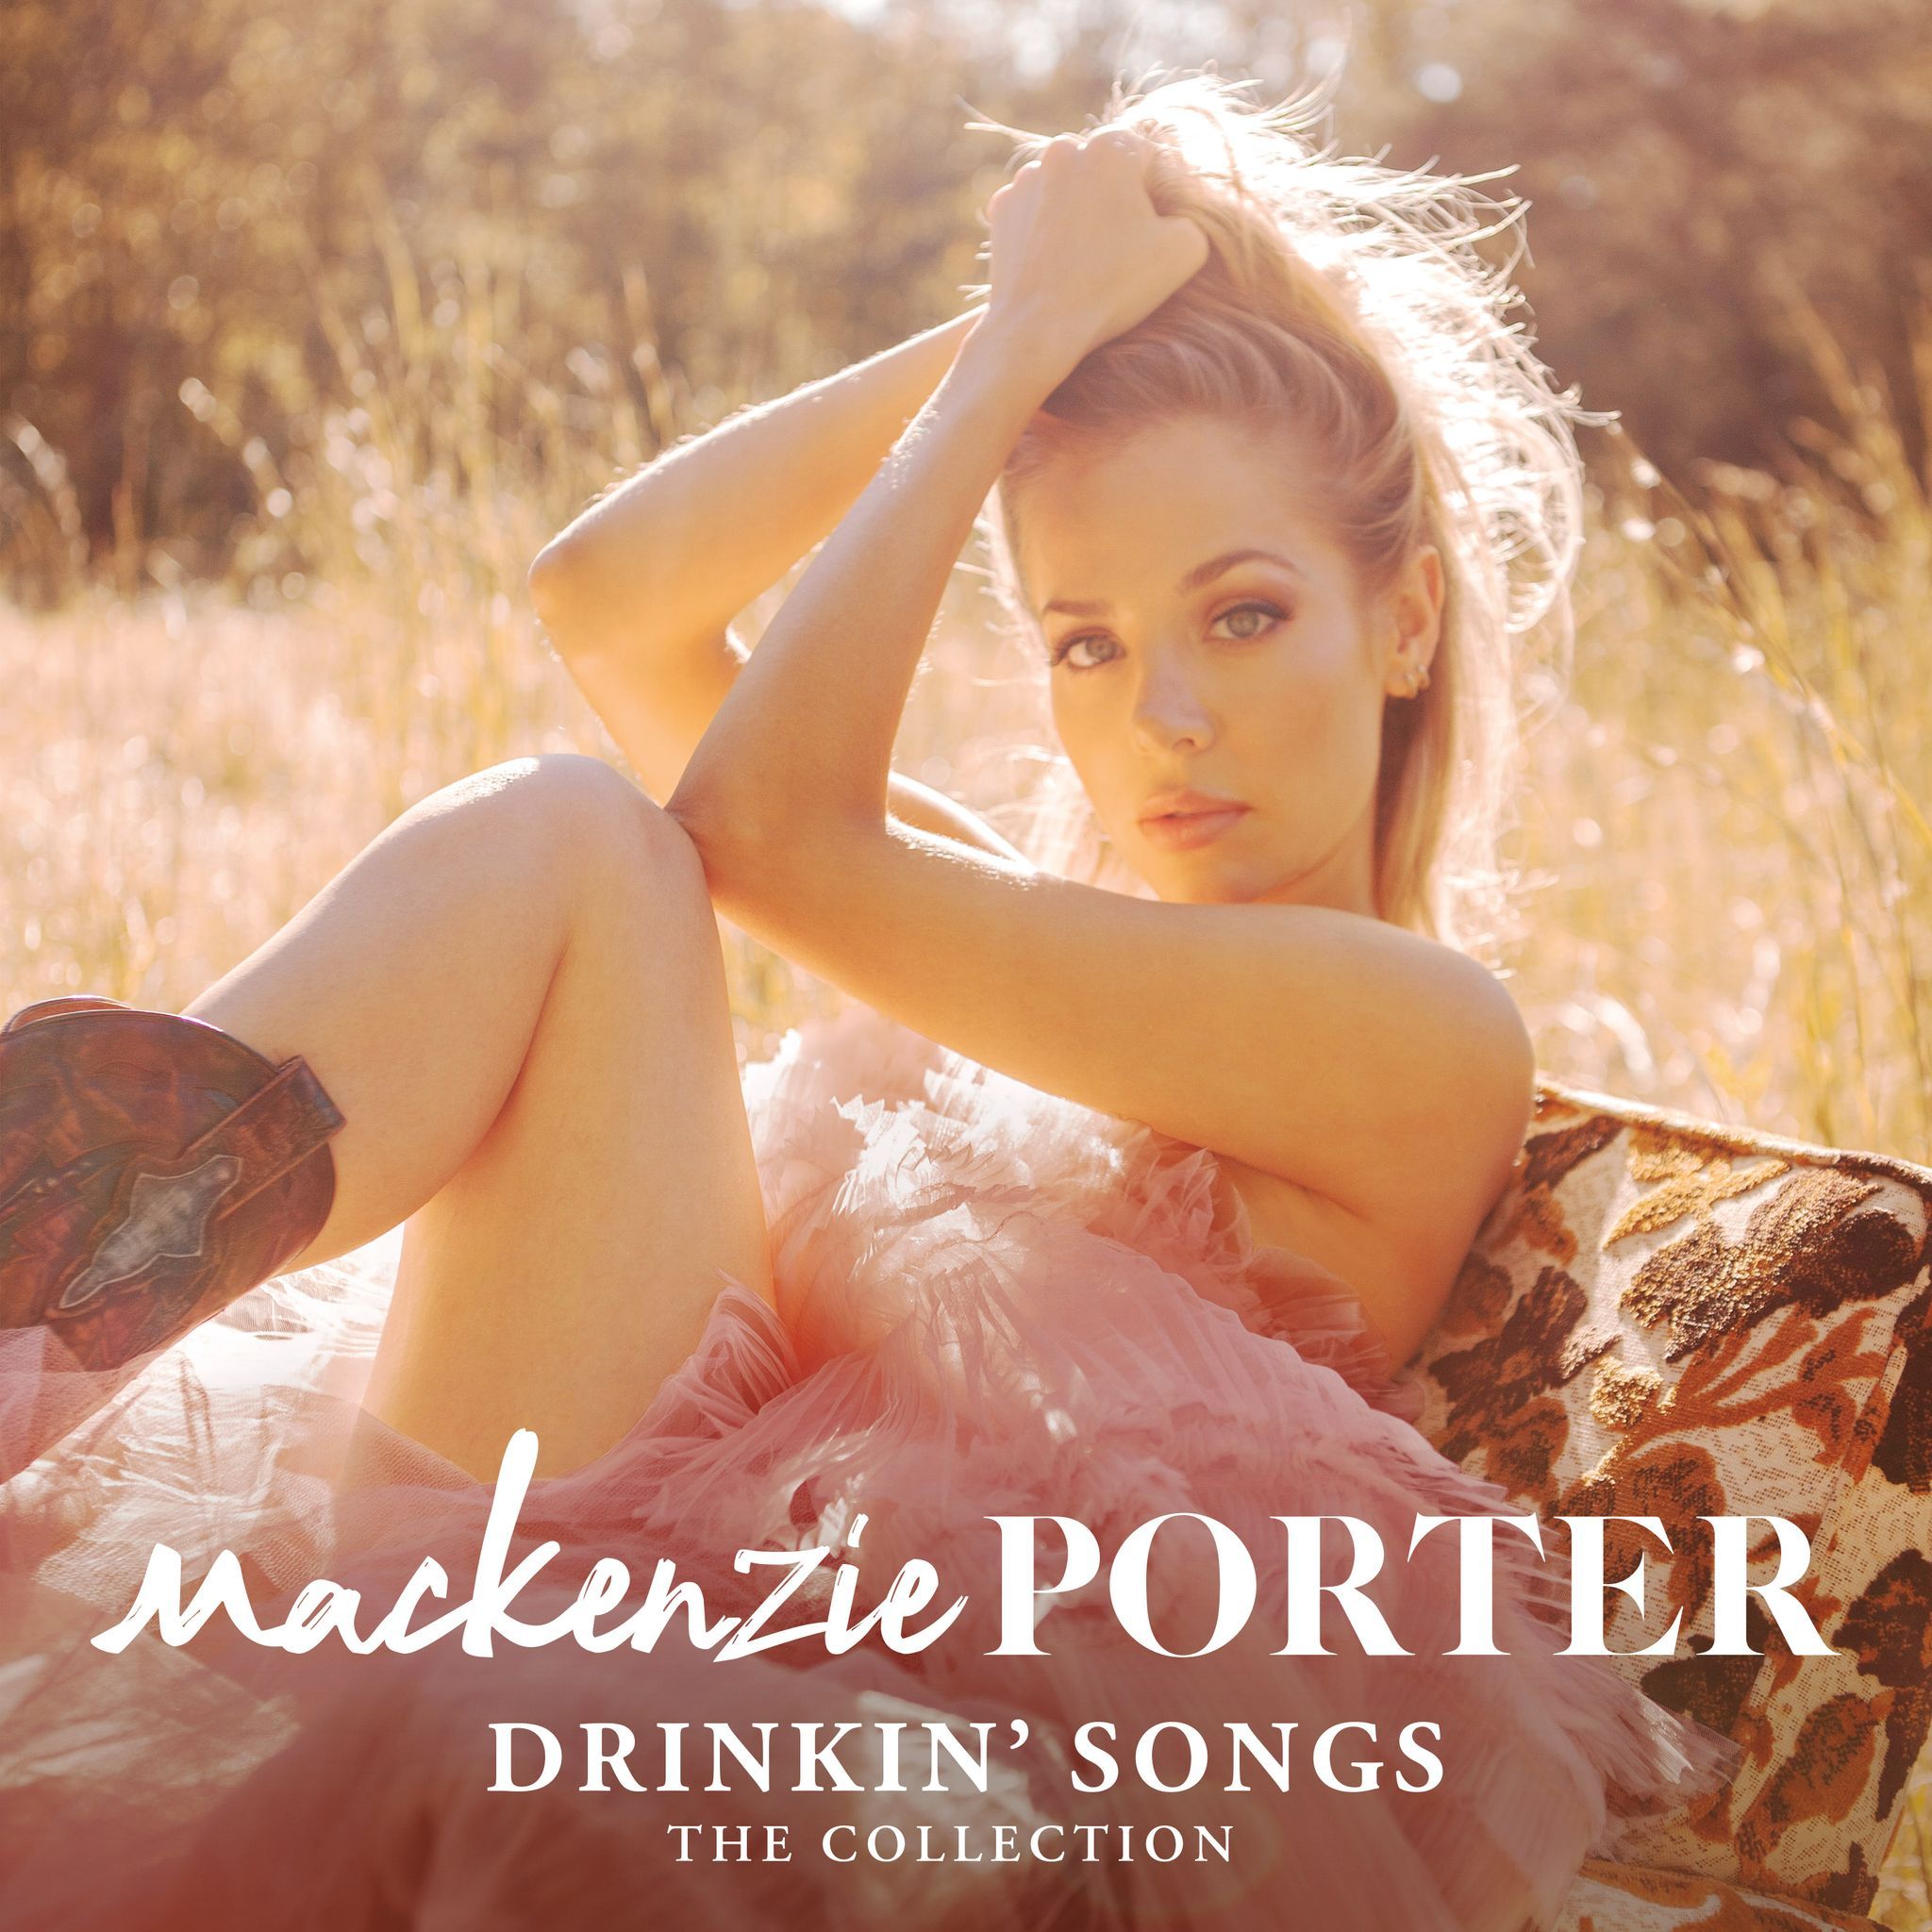 Mackenzie porter pictures